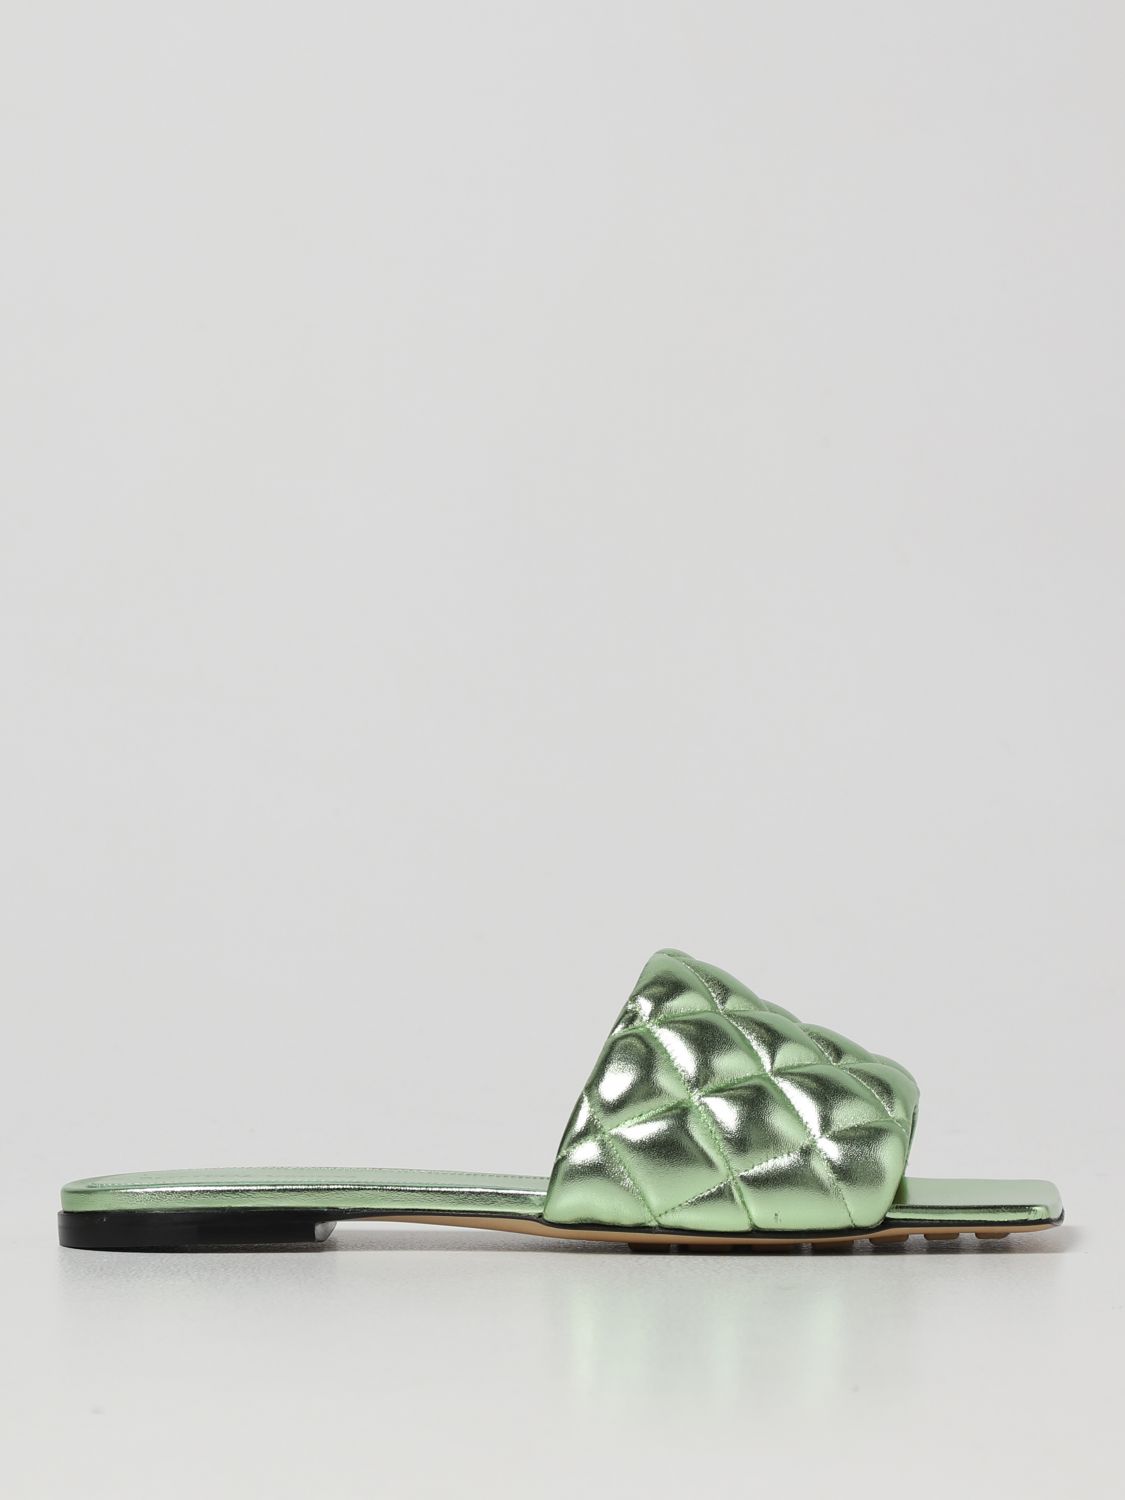 BOTTEGA VENETA: laminated leather sandals - Pistachio | Bottega Veneta flat sandals 627710V27M0 online on